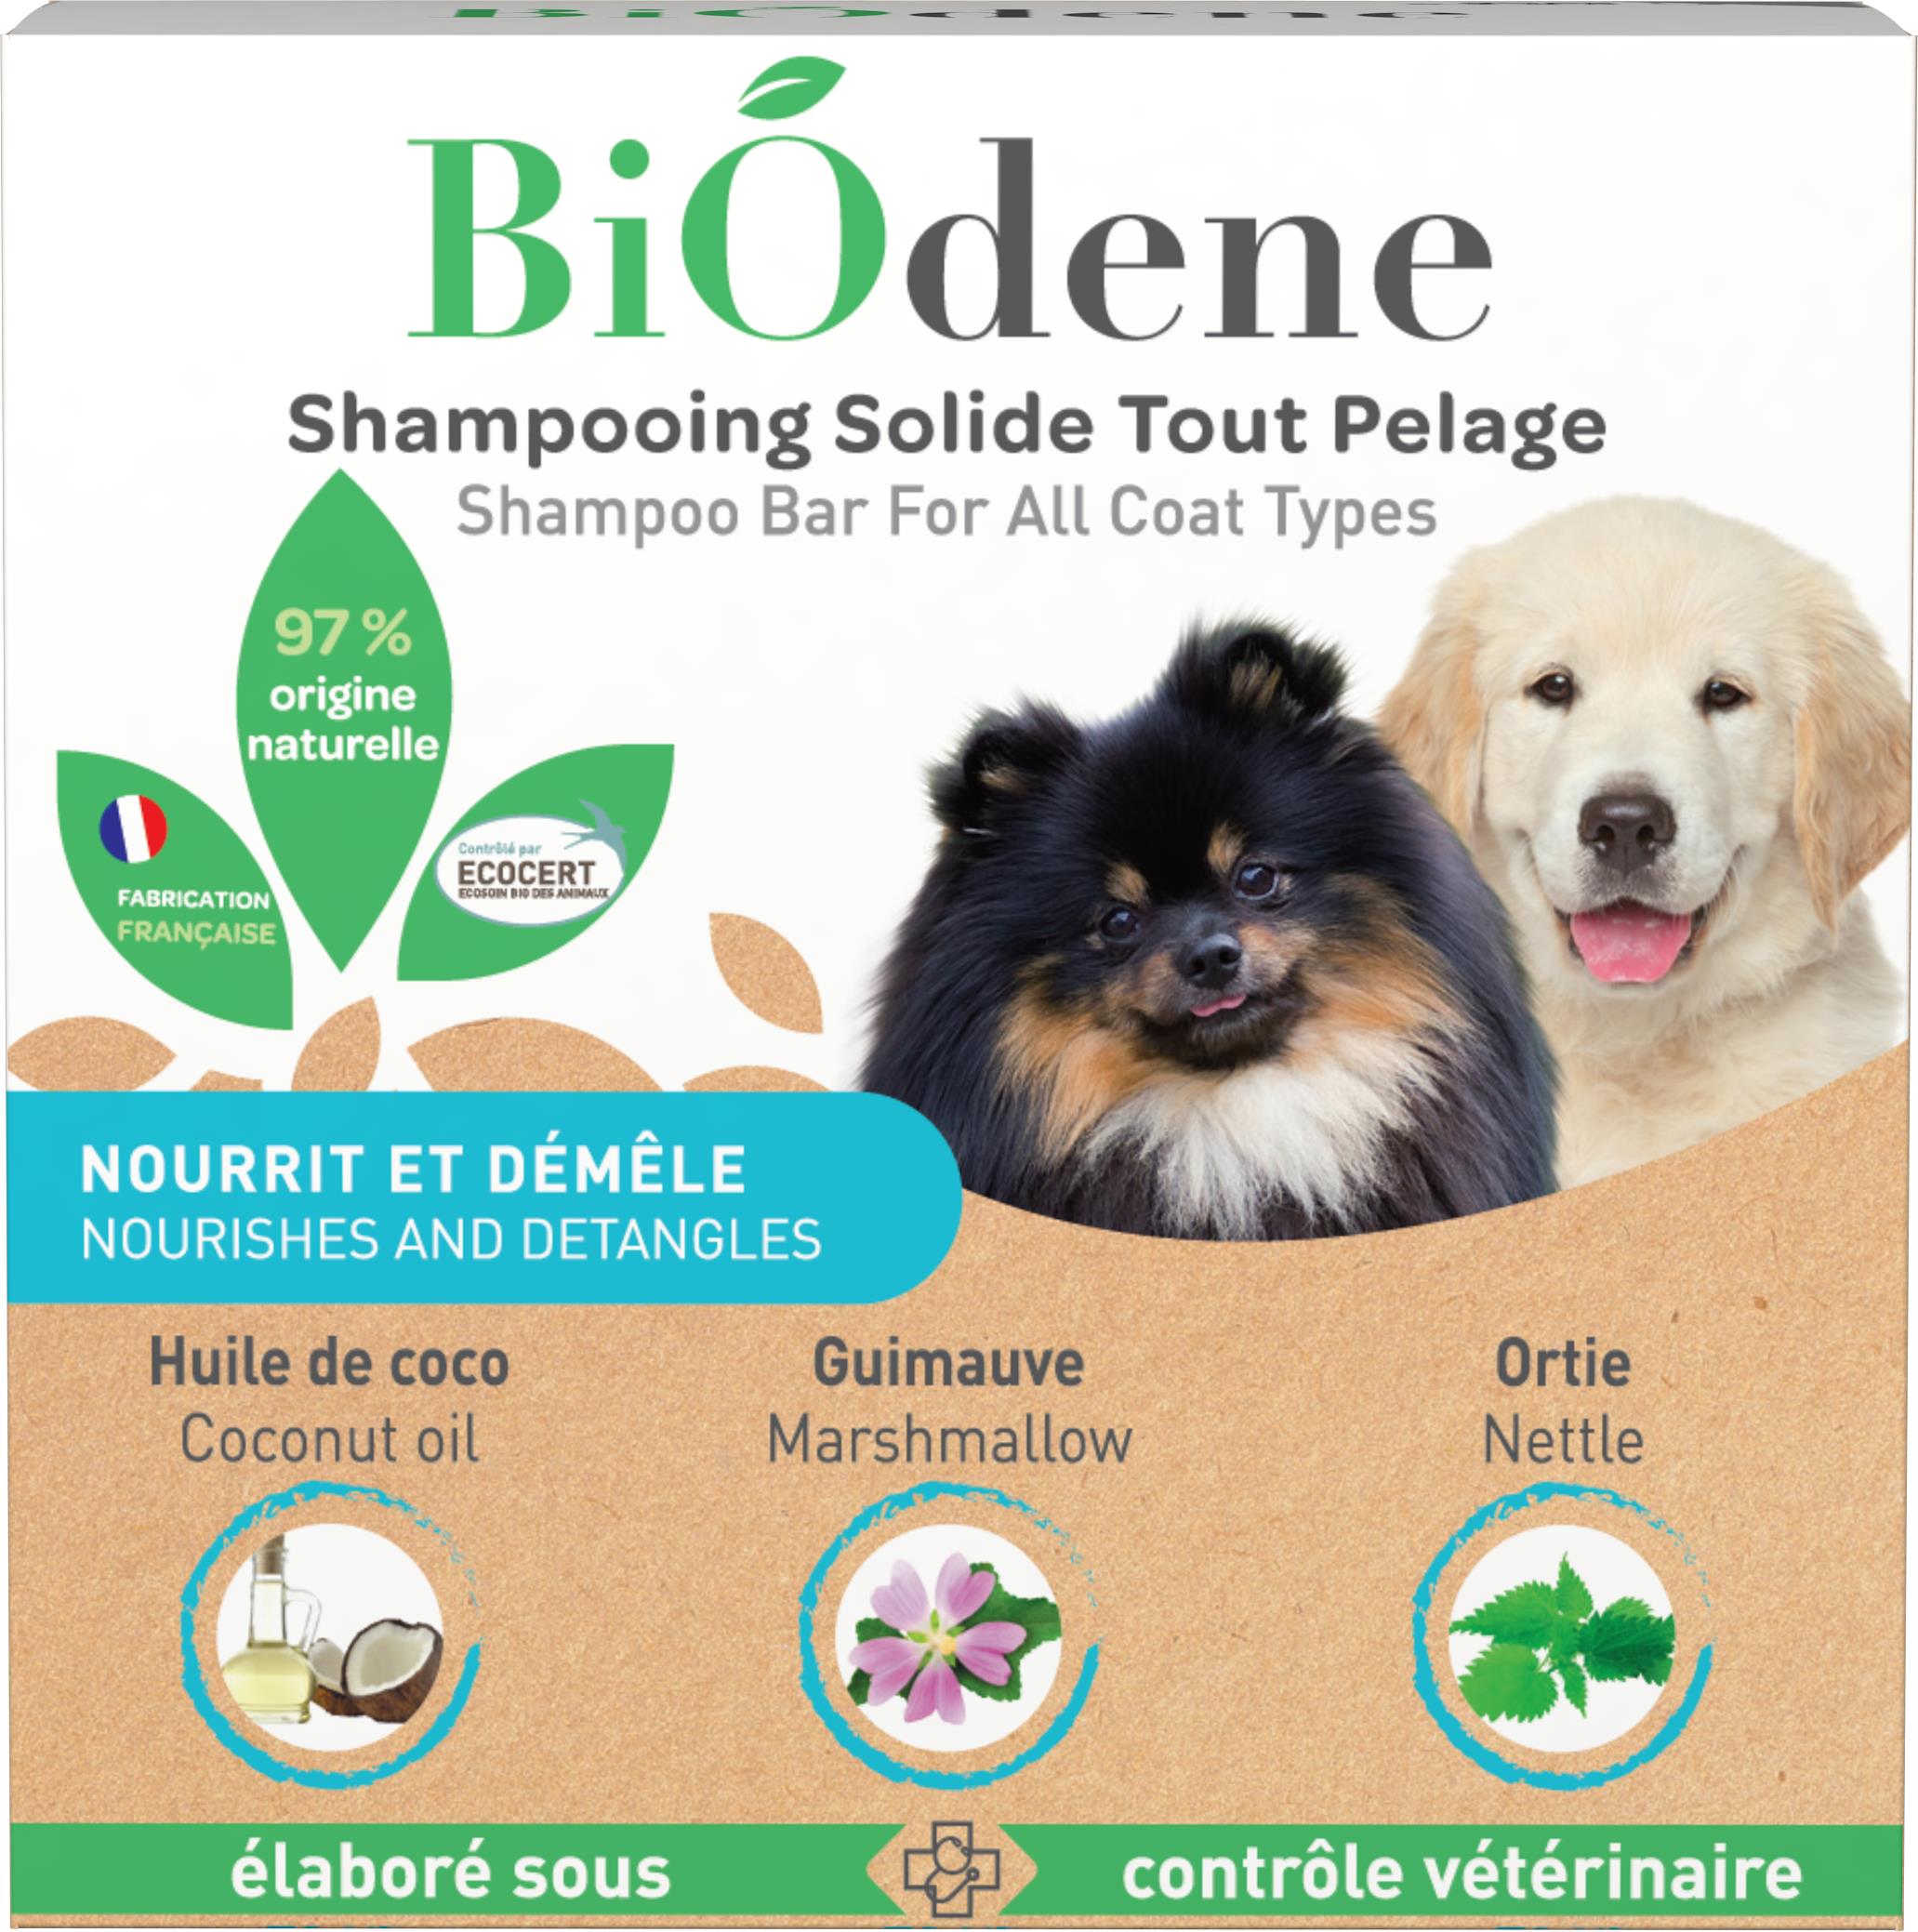 Soin Chien – Biodene Shampooing Solide Tout Pelage – 100 gr